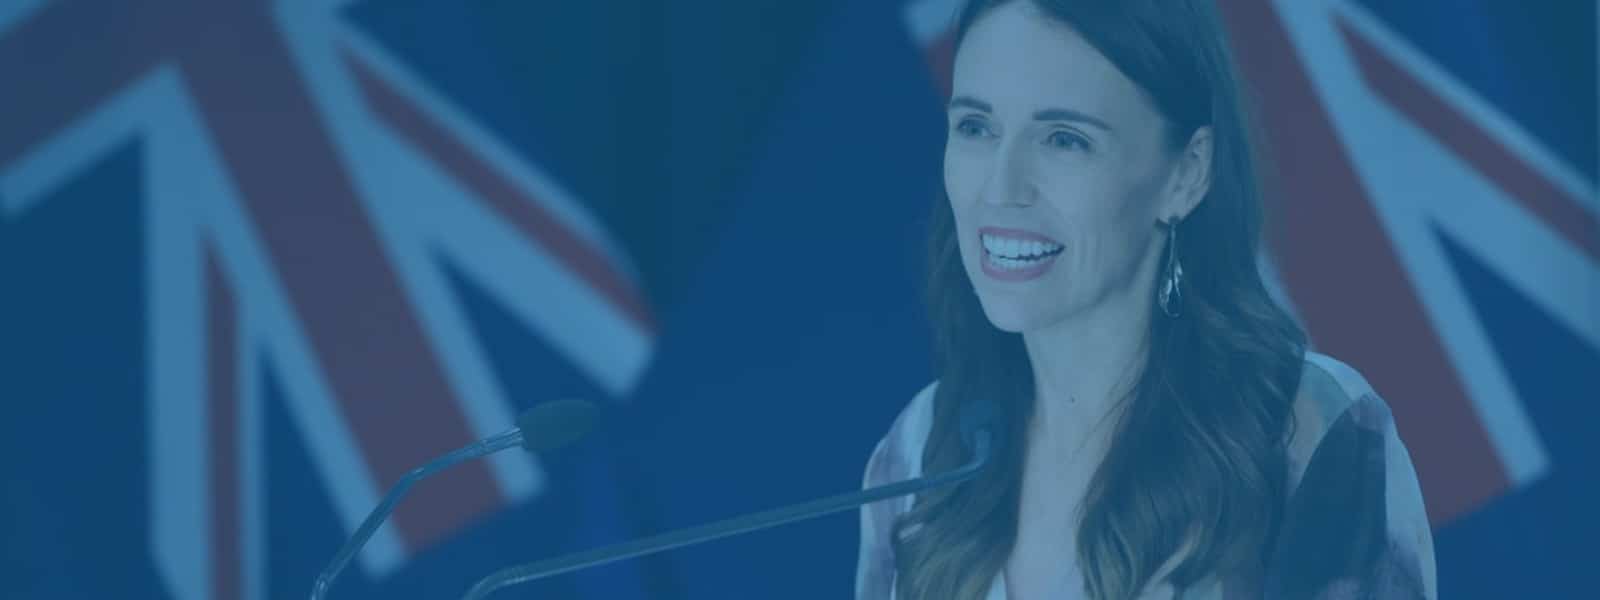 PM Speech To New Zealand US Business Summit